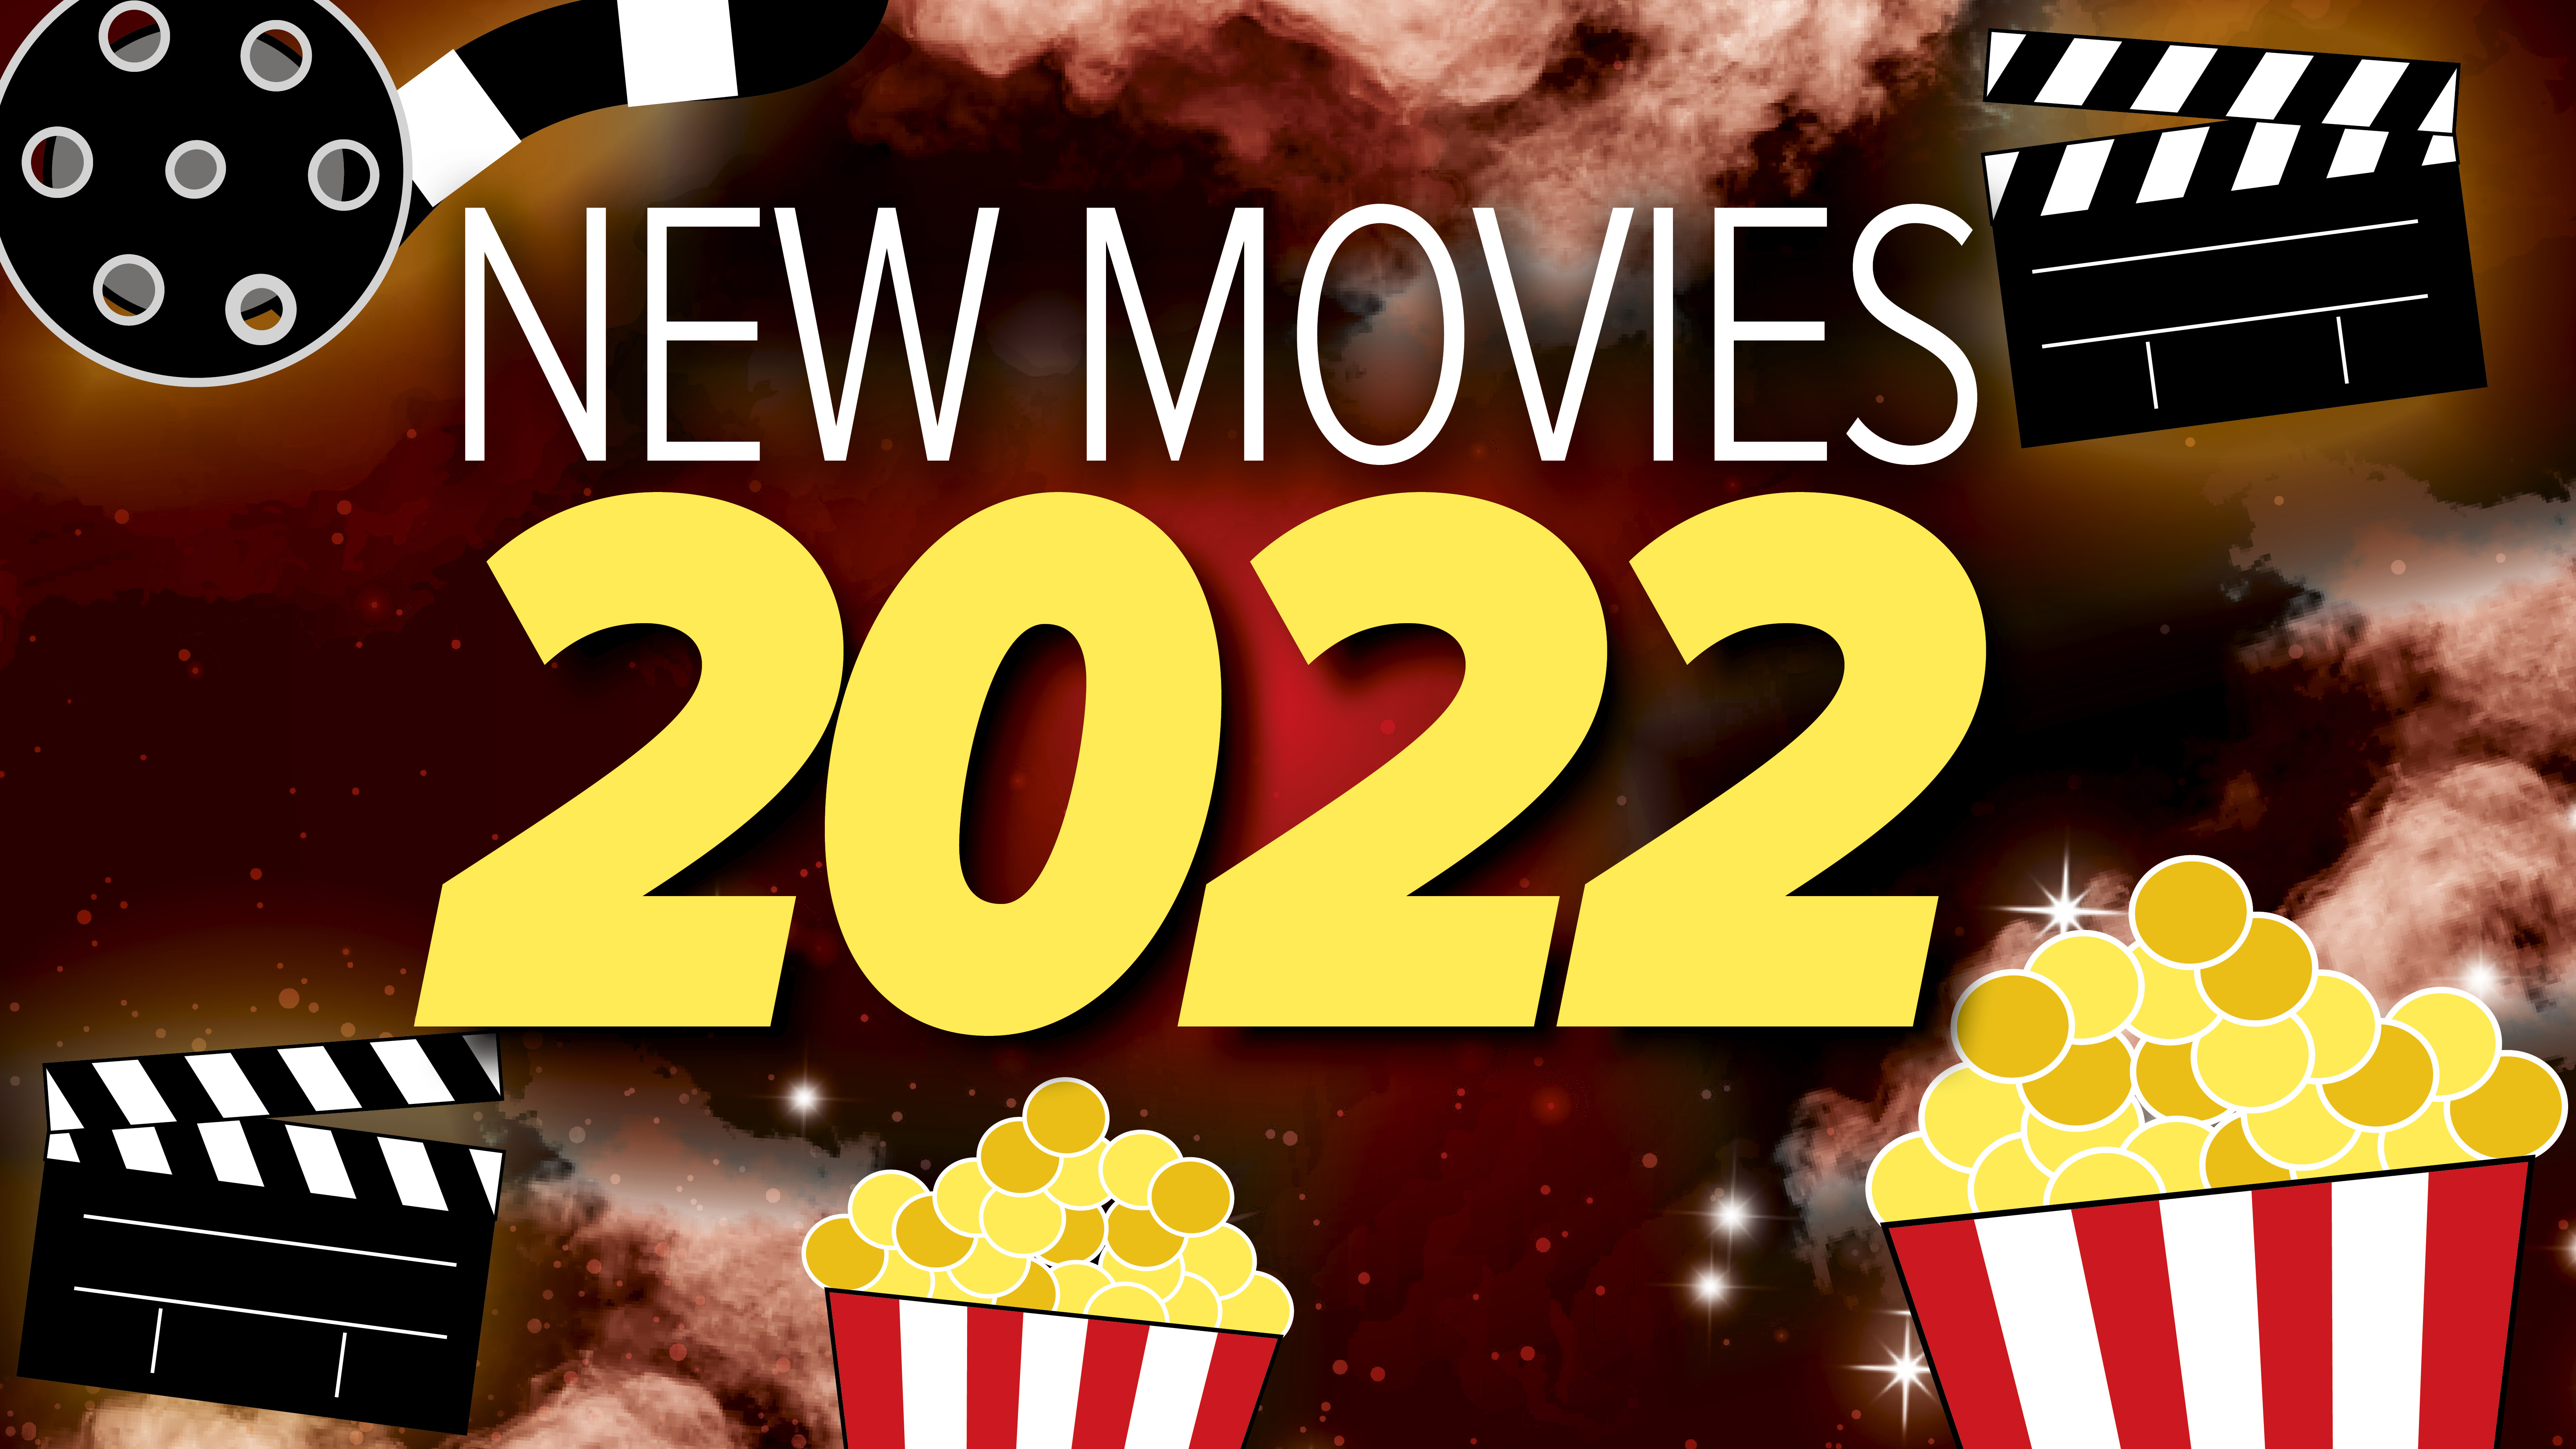 New movie 2022